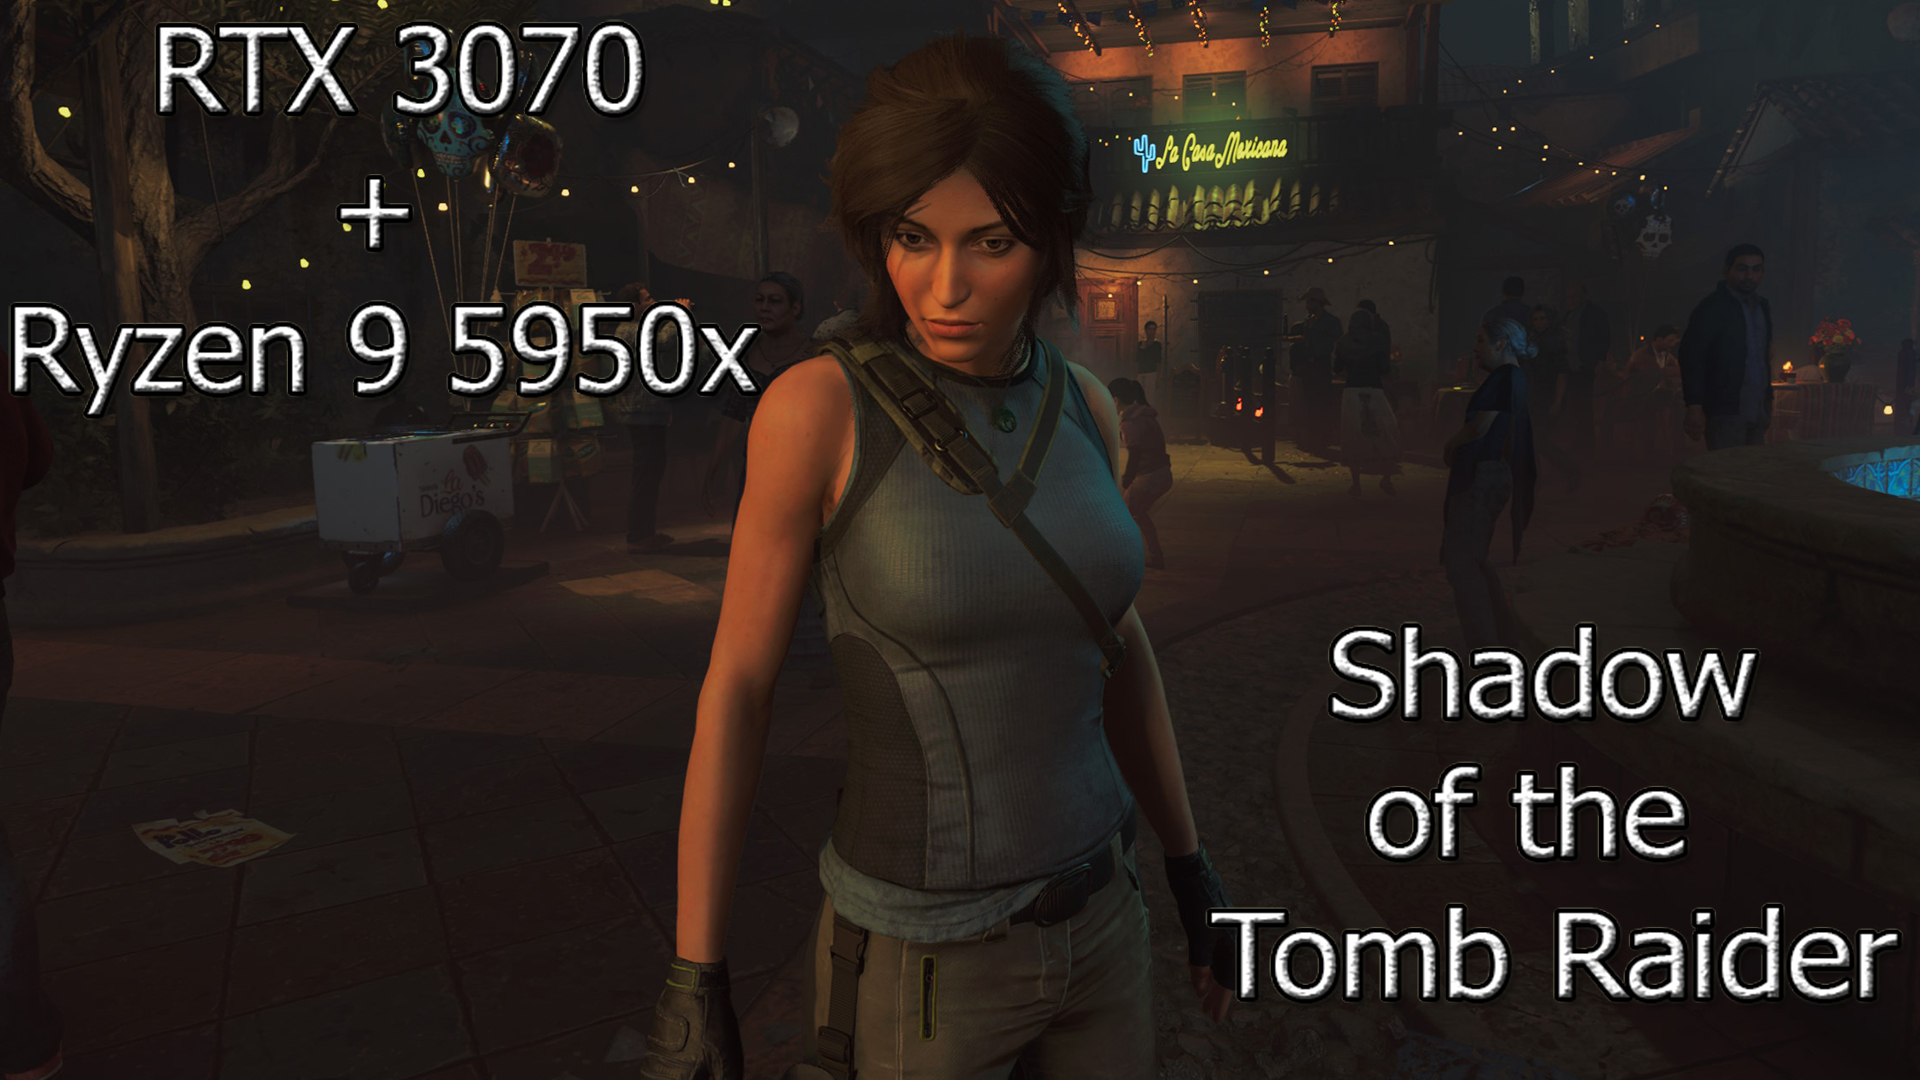 RTX 3070 + Ryzen 9 5950x Shadow of the Tomb Raider